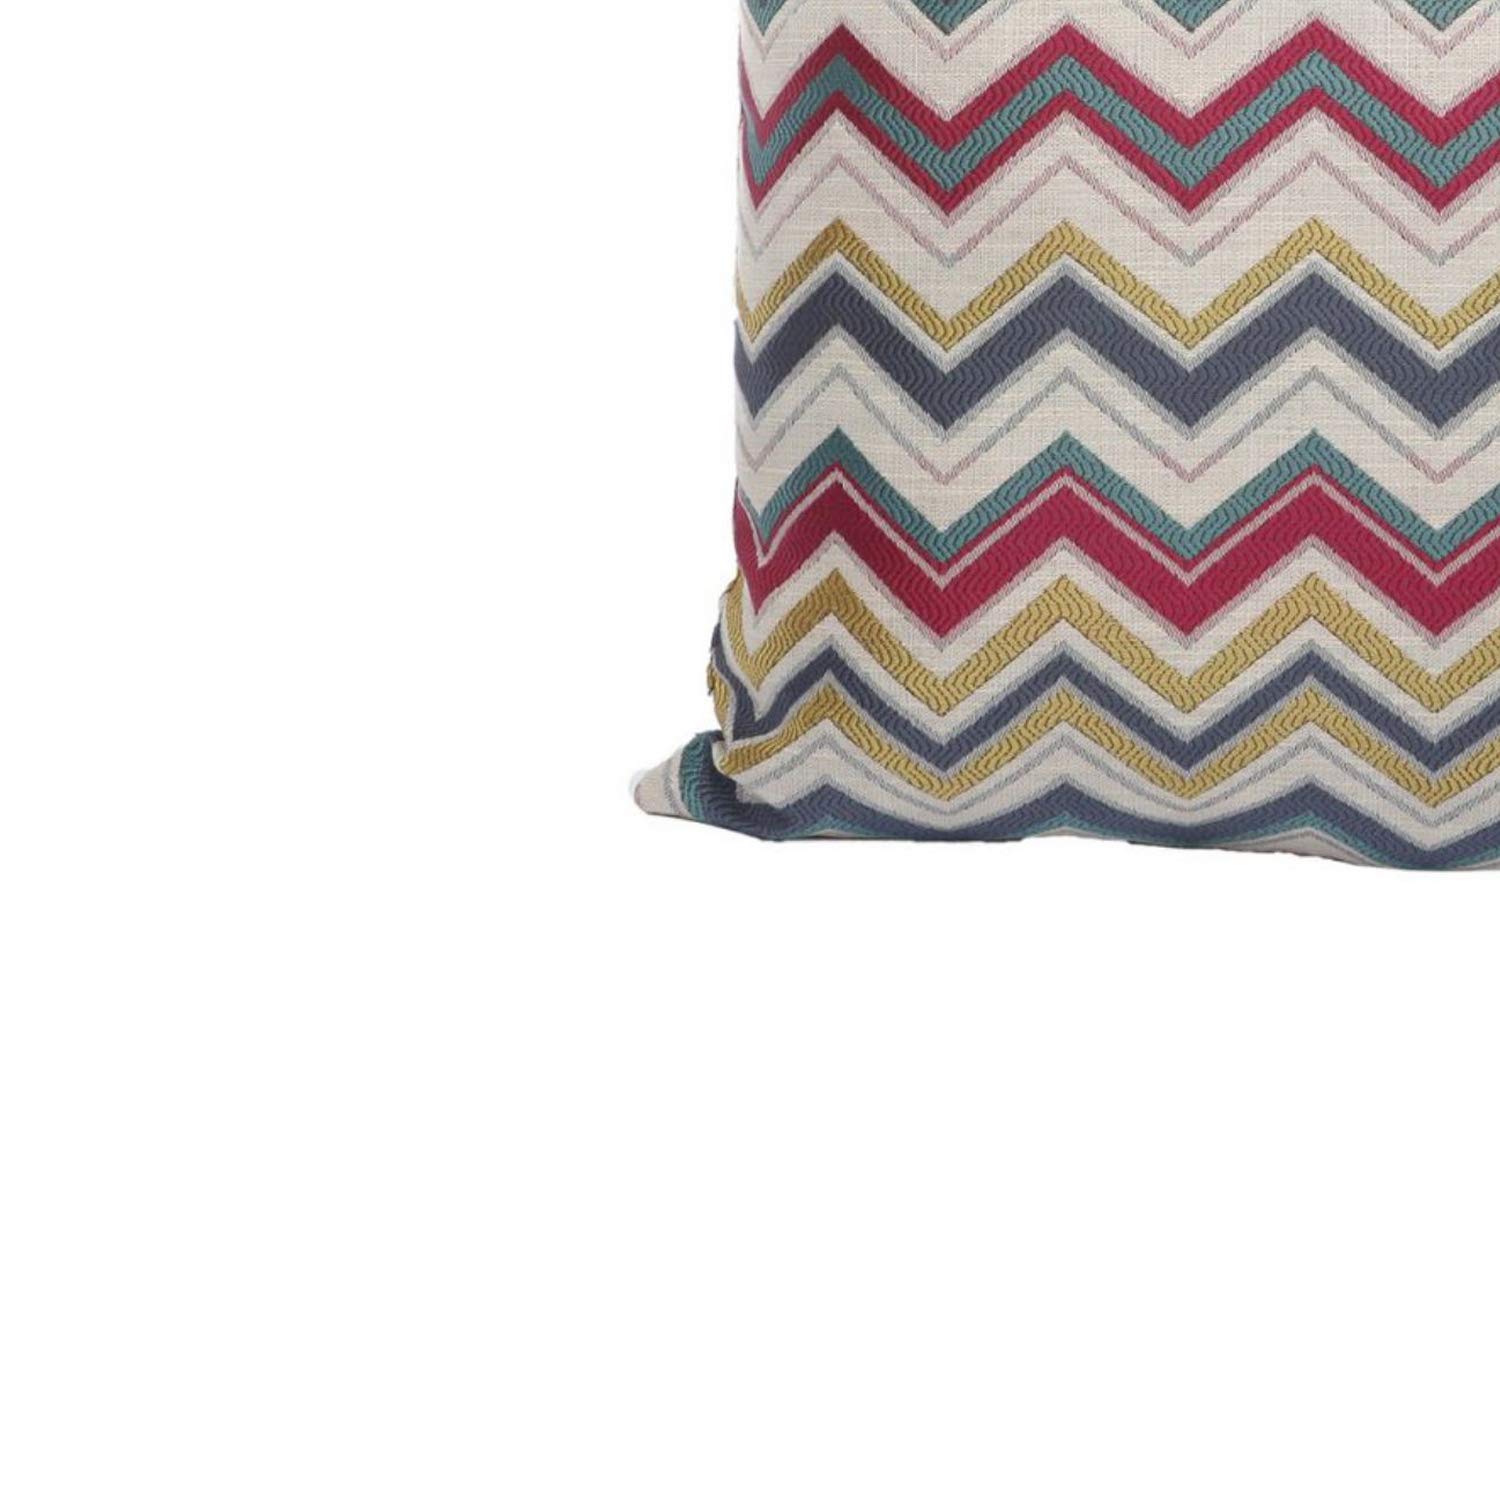 Benjara Woven Design Fabric Accent Pillow in Zigzag Pattern, Multicolor